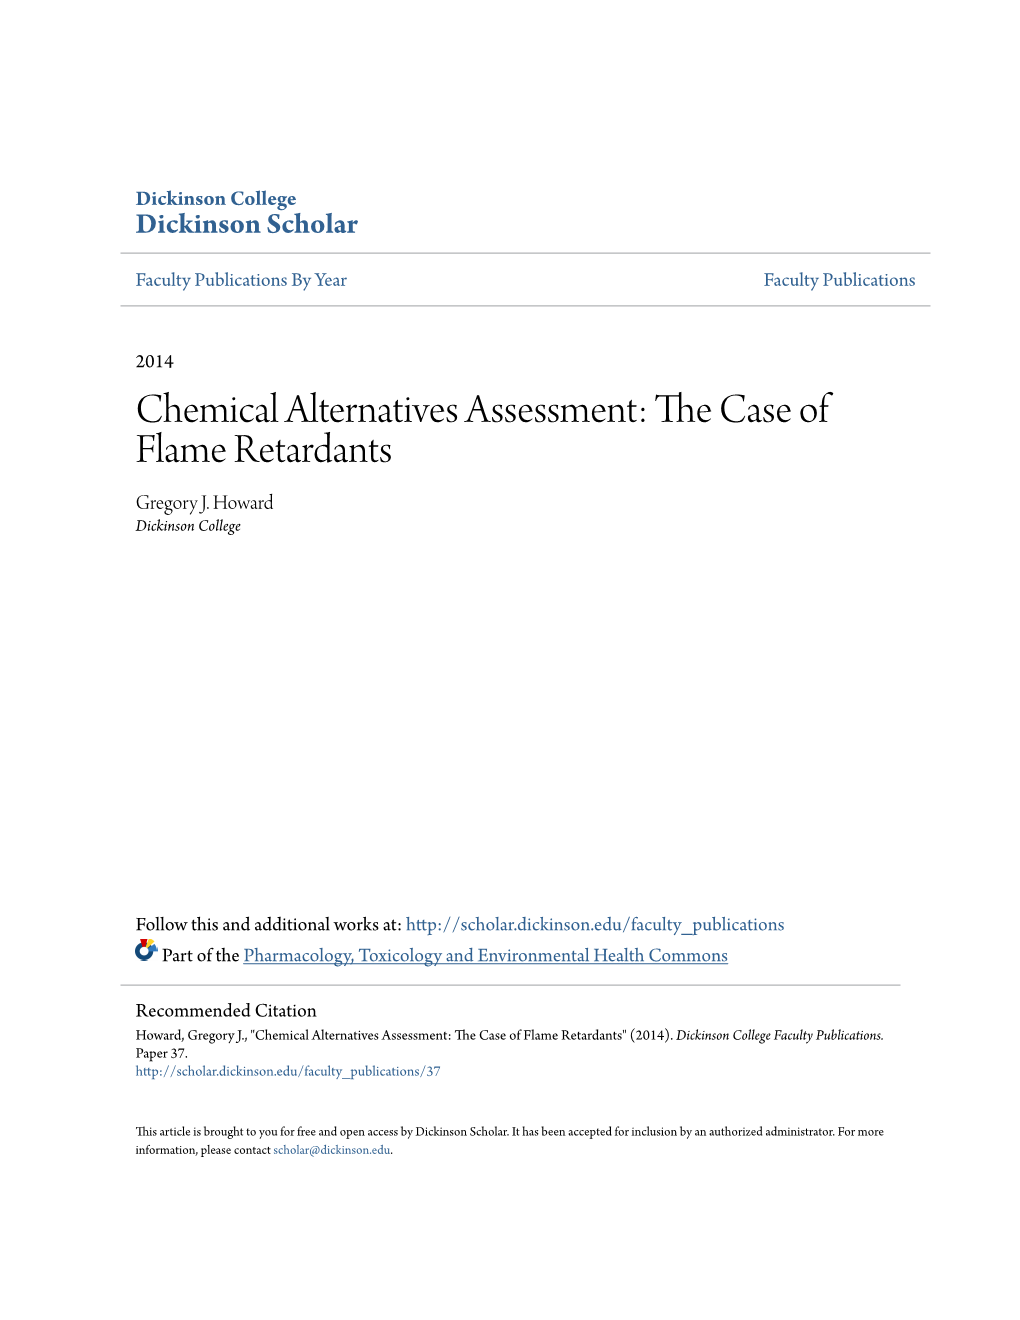 Chemical Alternatives Assessment: the Case of Flame Retardants